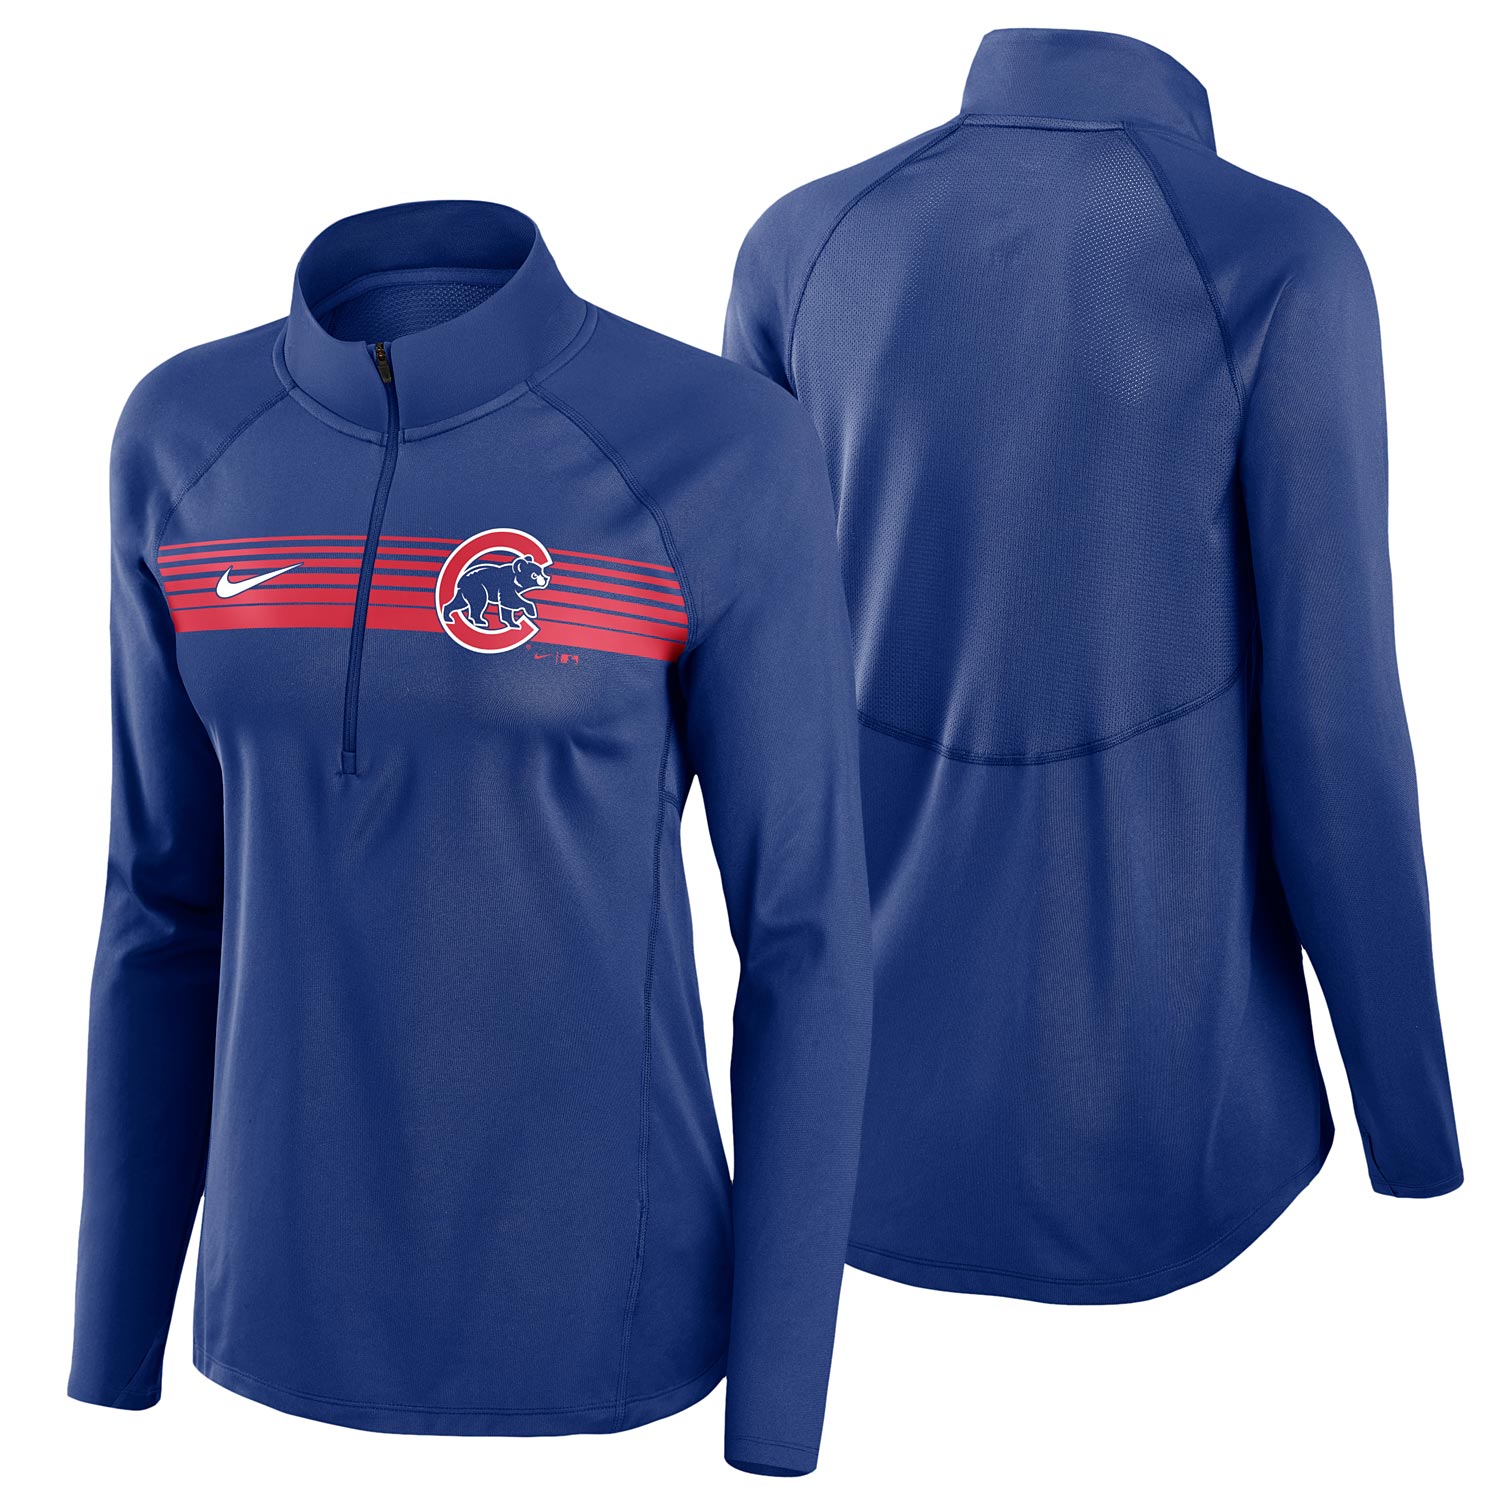 Chicago Cubs Ladies Nike Seam to Seam Element Half Zip Sweatshirt Large